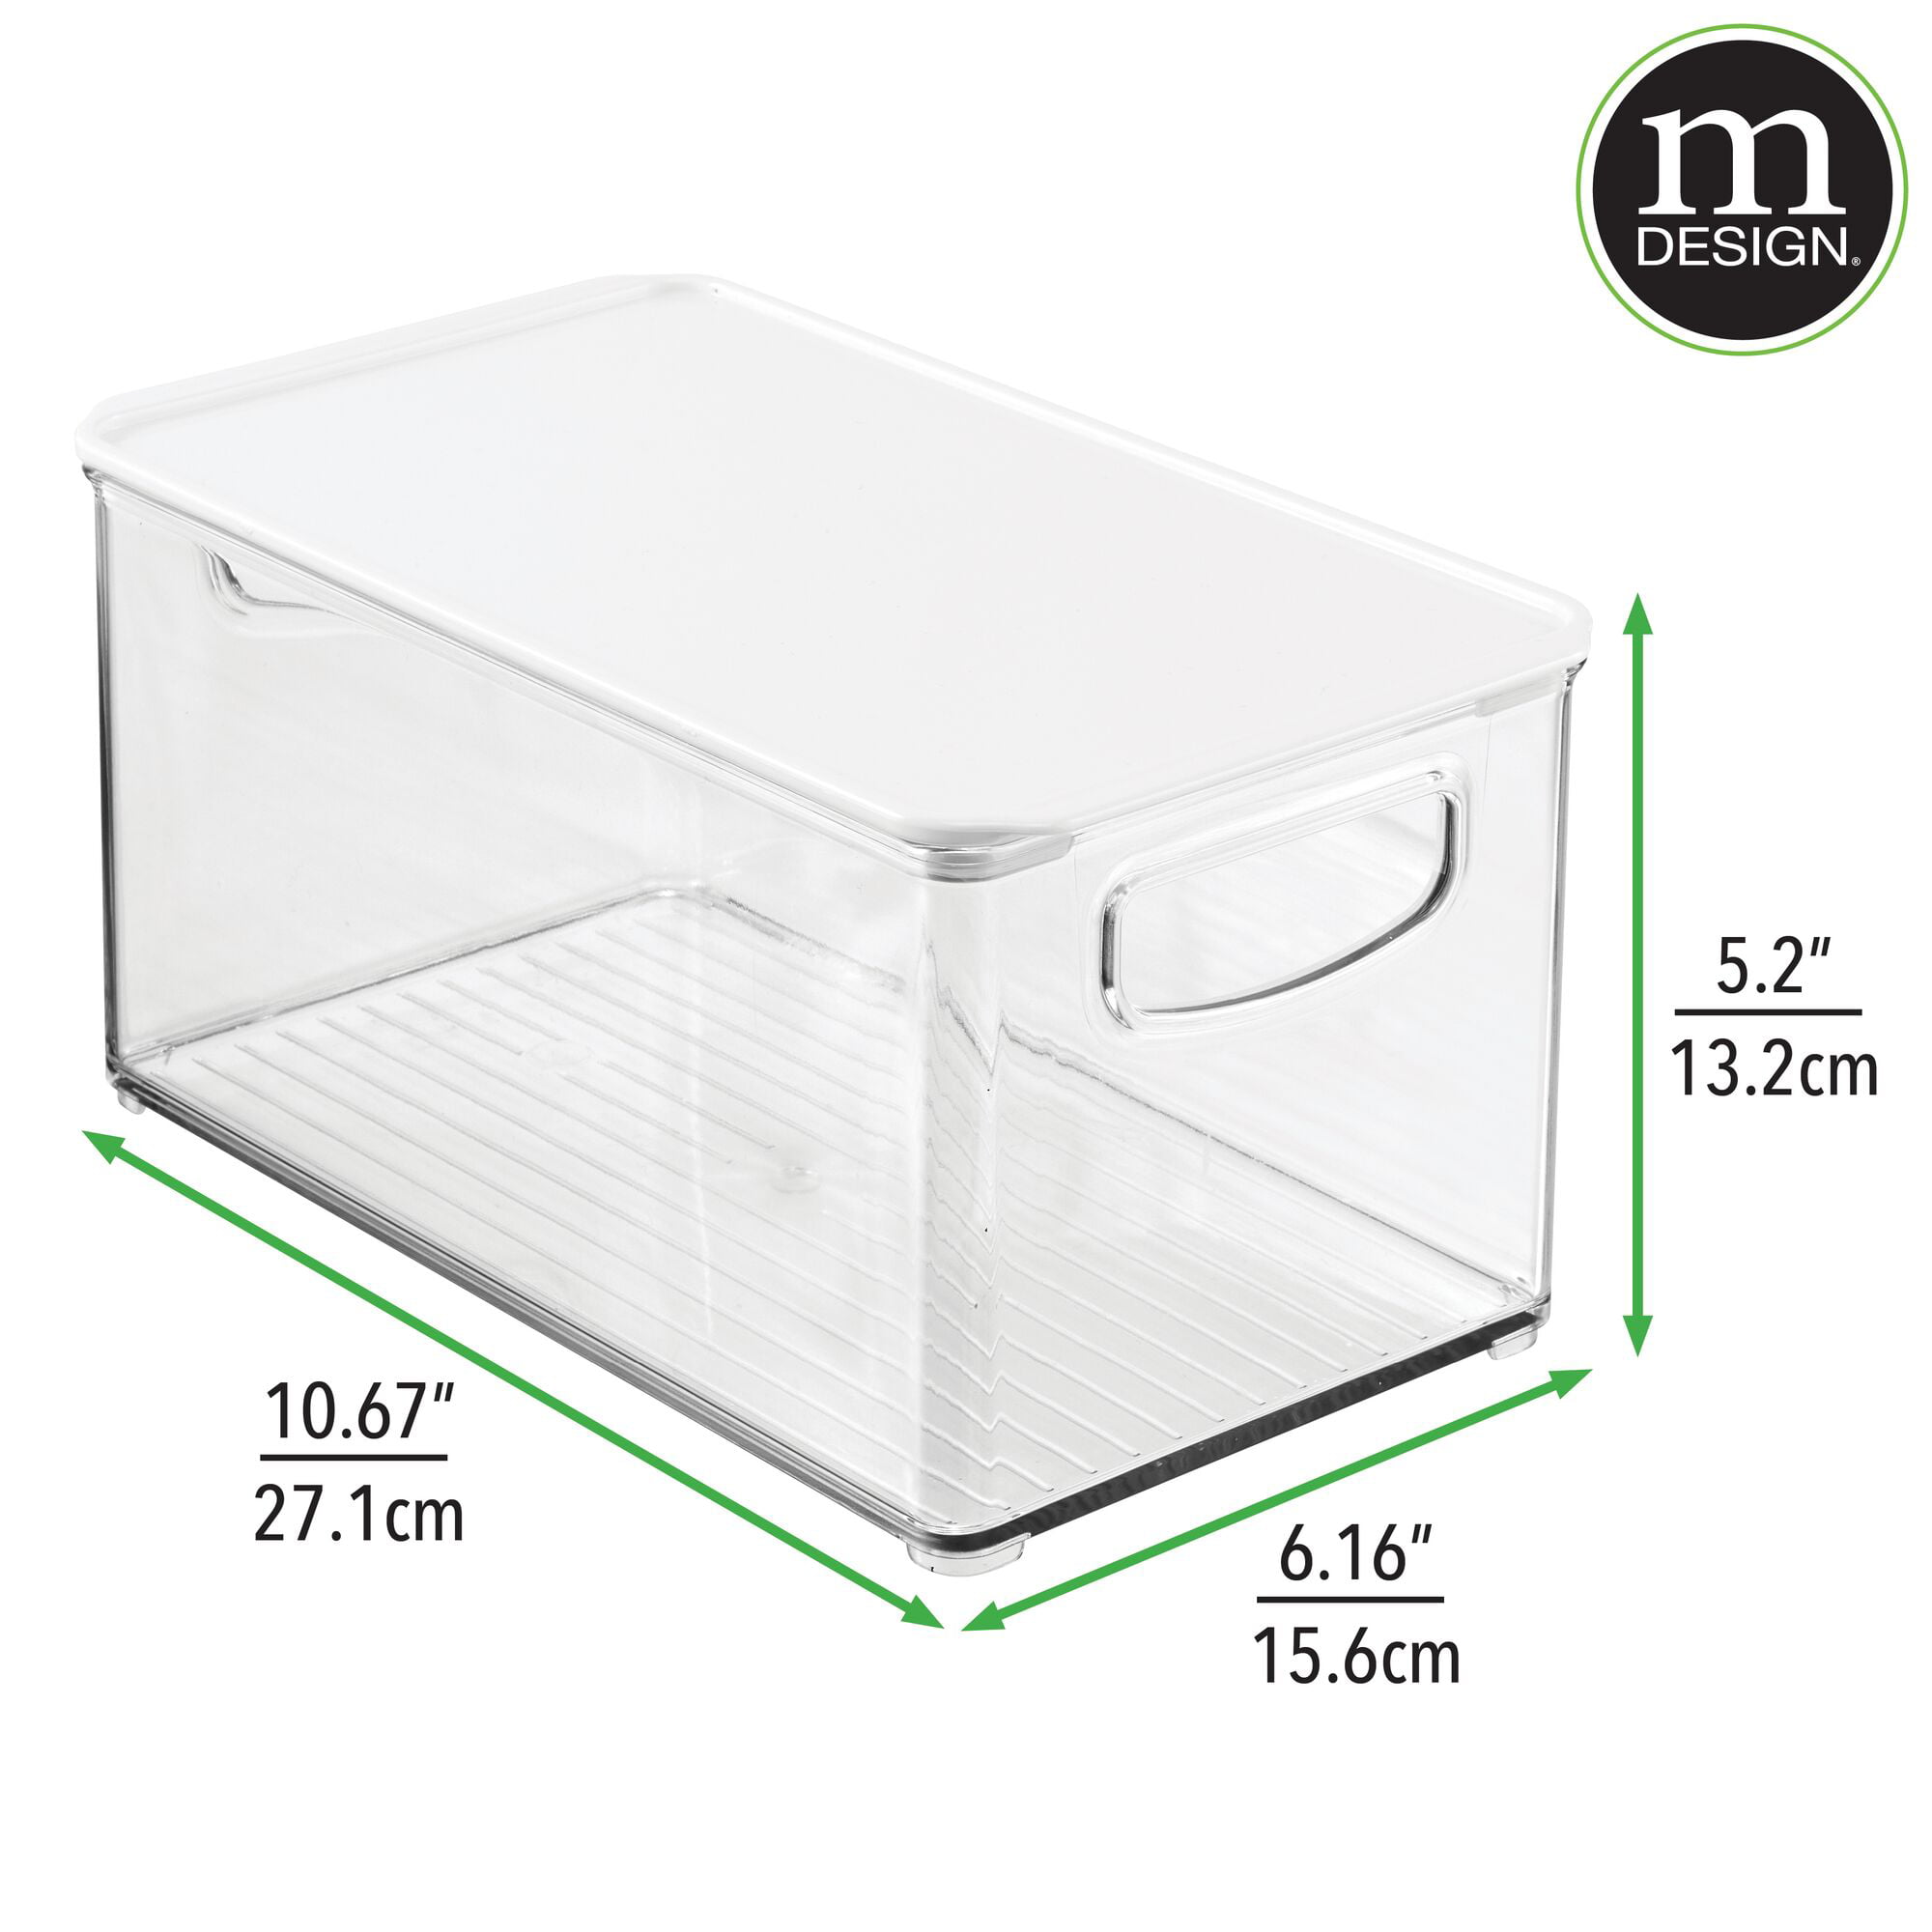 mDesign Plastic Bathroom Storage Bin with Handles - 16 x 6 x 6